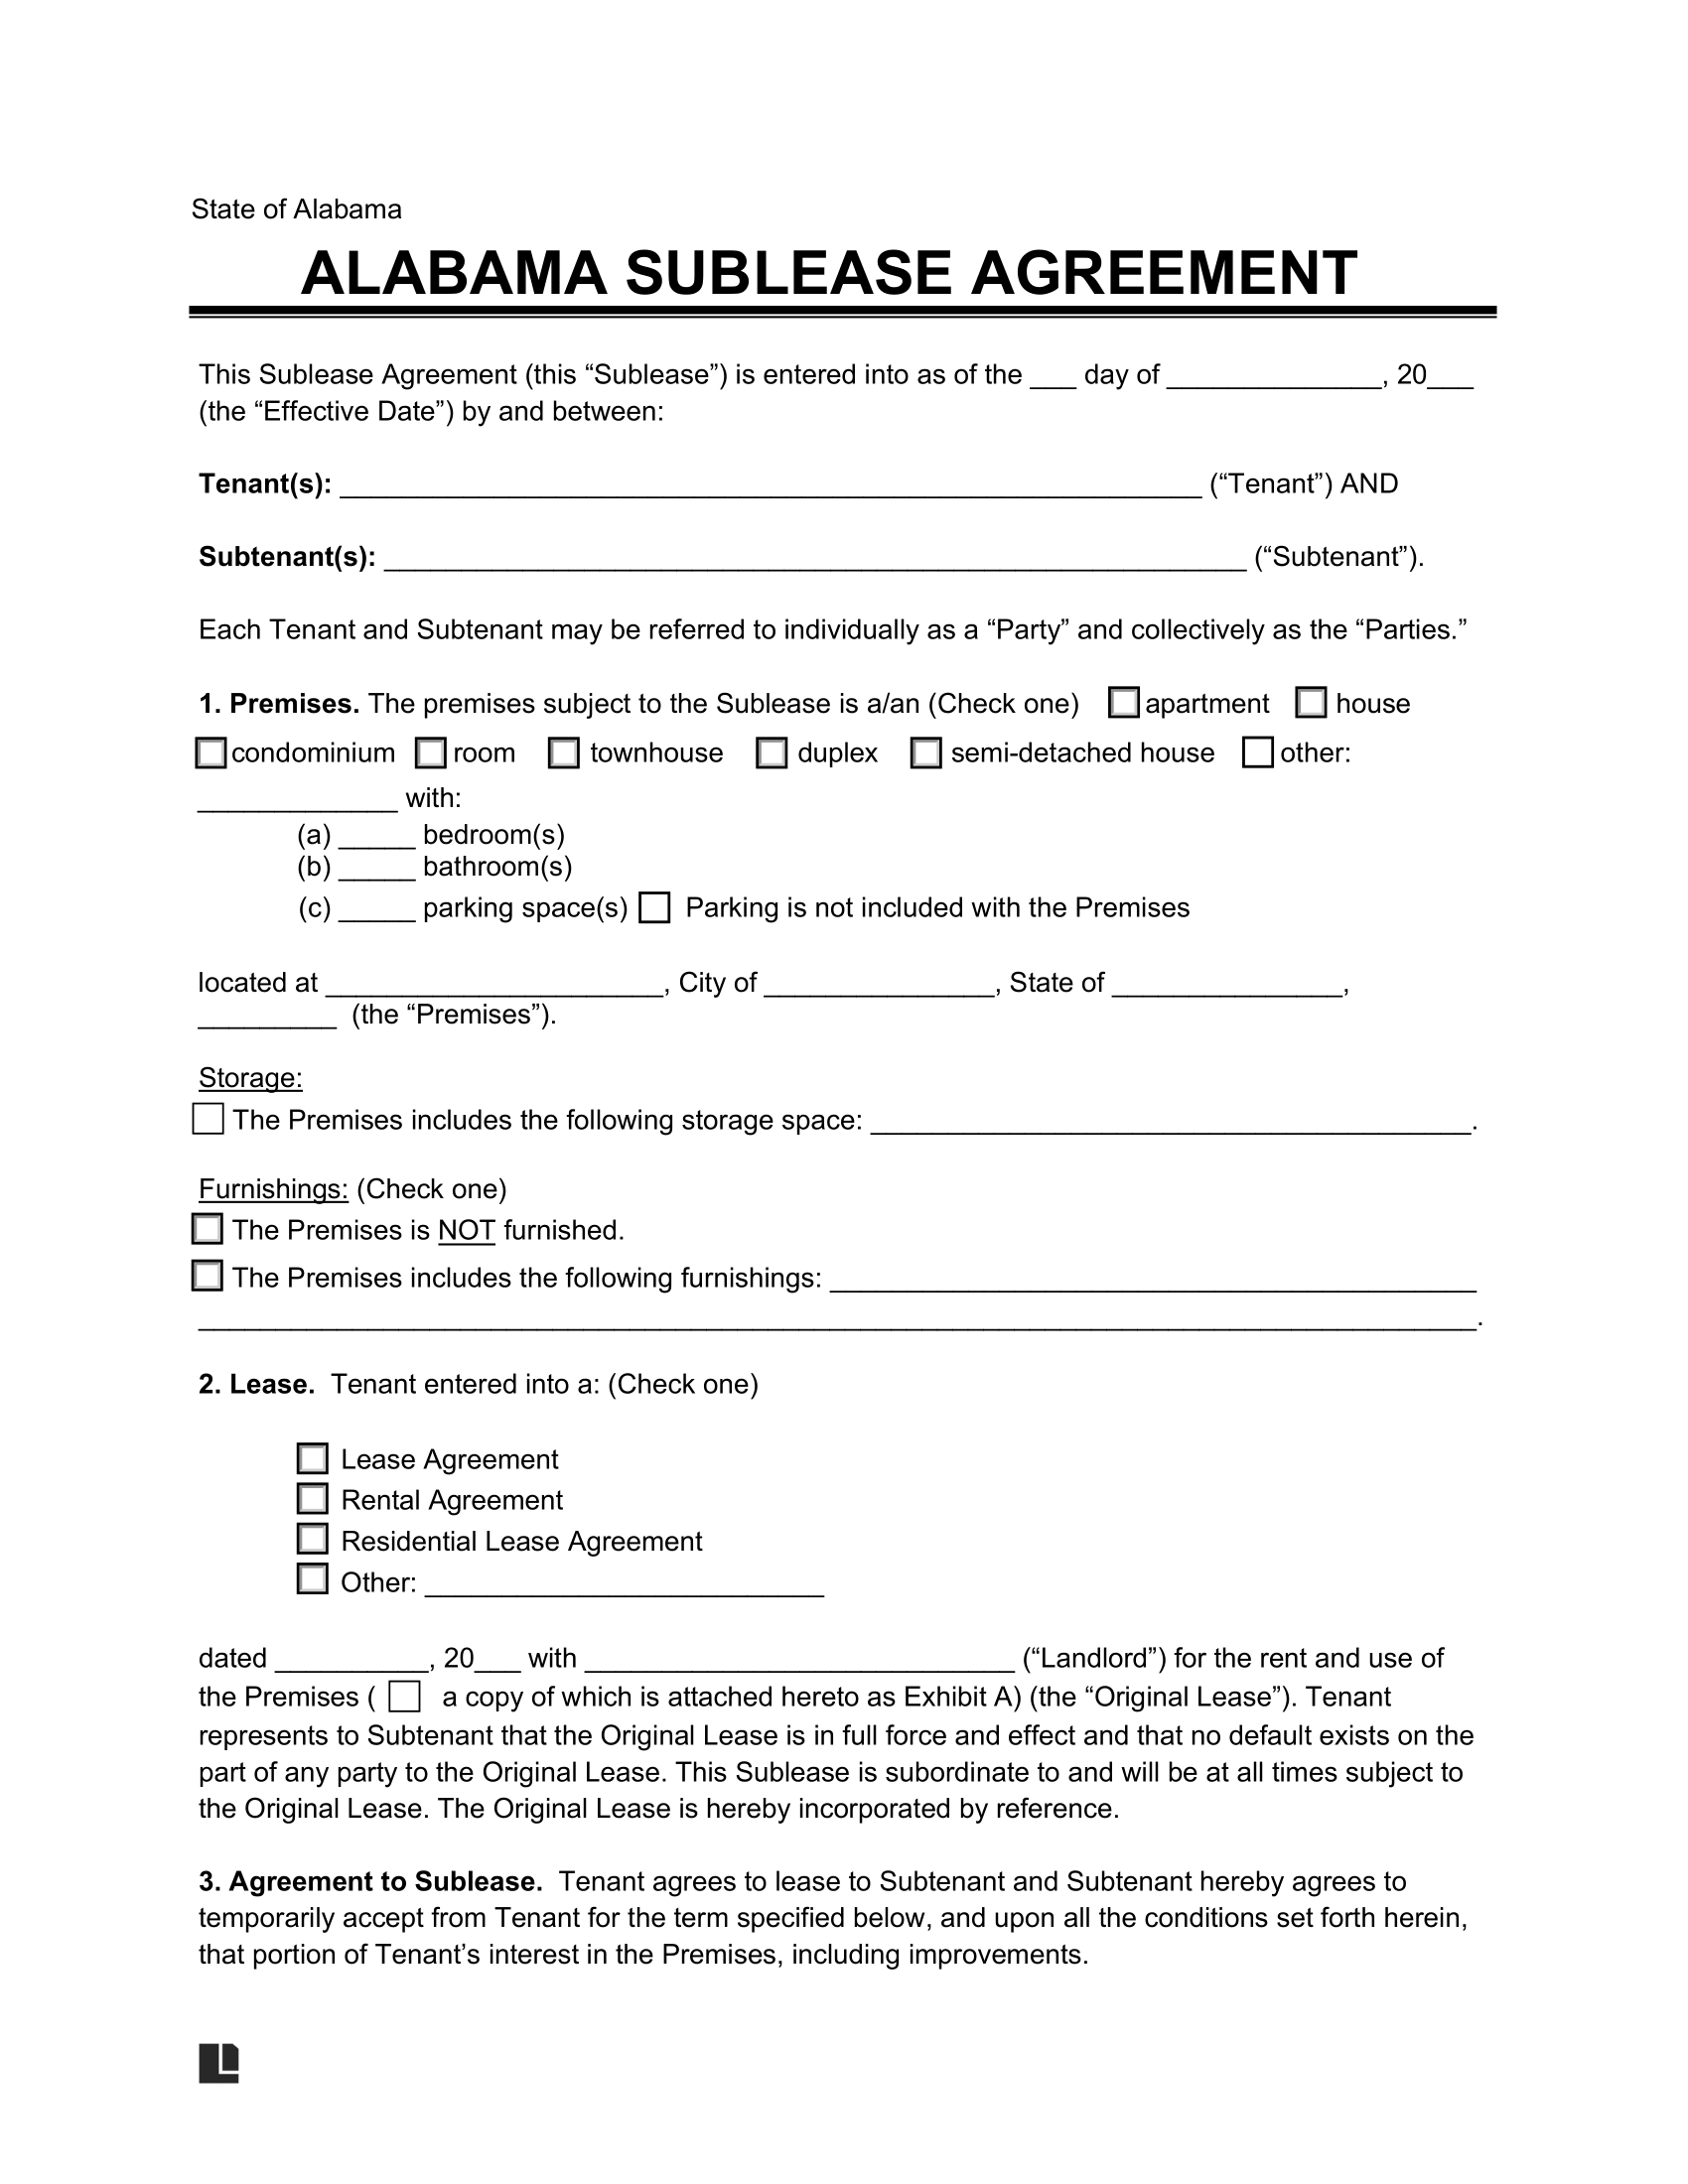 Alabama Sublease Agreement Template